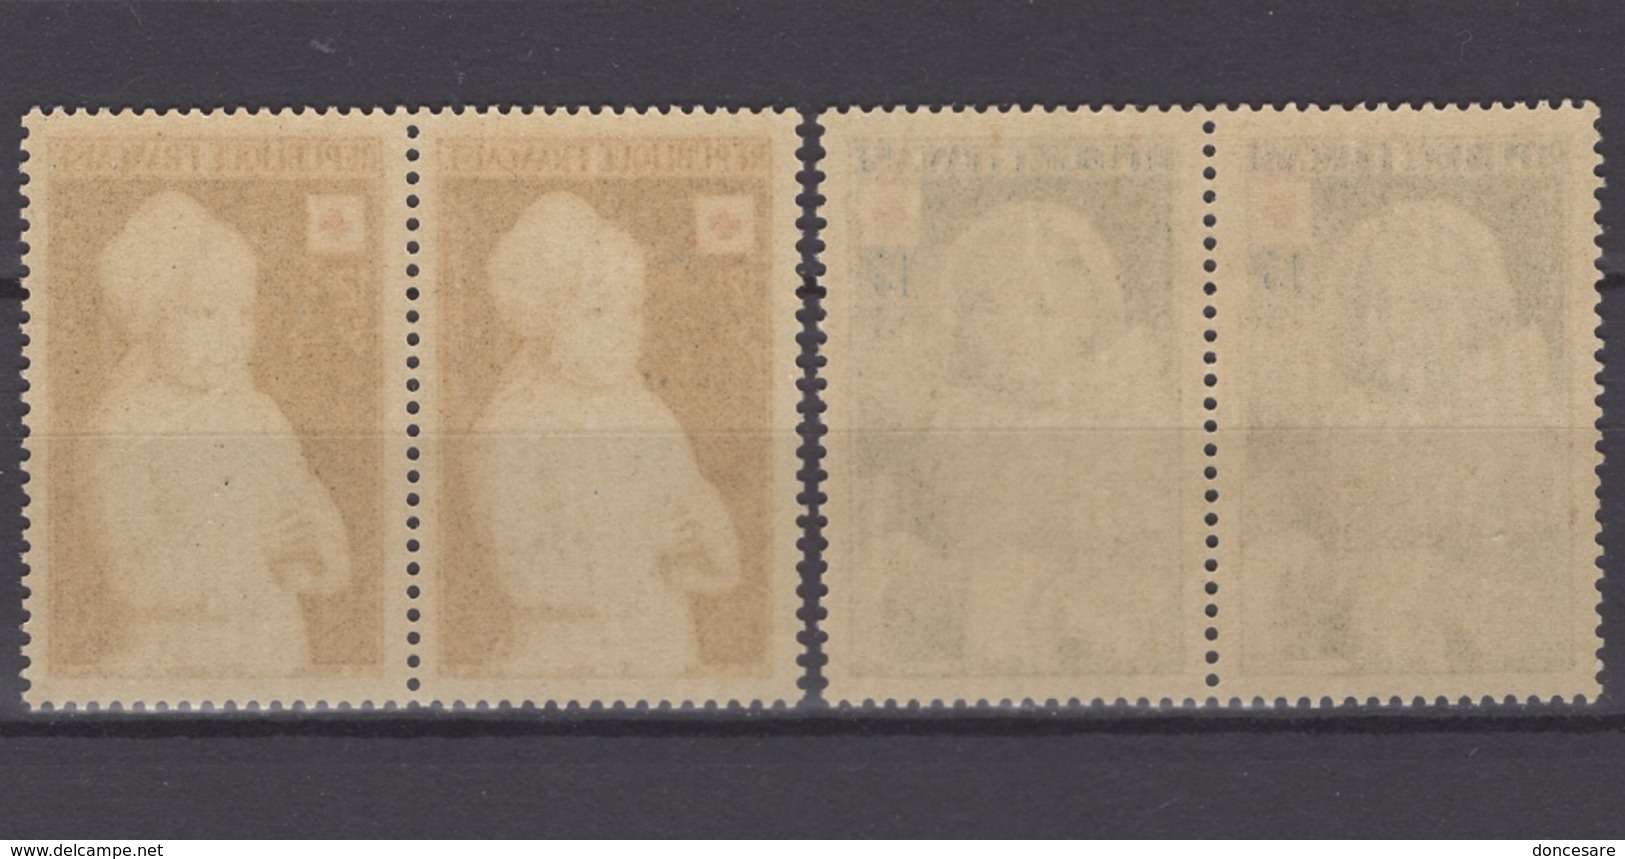 FRANCE 1951 - SERIE 2 PAIRES / Y.T. N° 914 ET 915 - NEUFS** - Unused Stamps